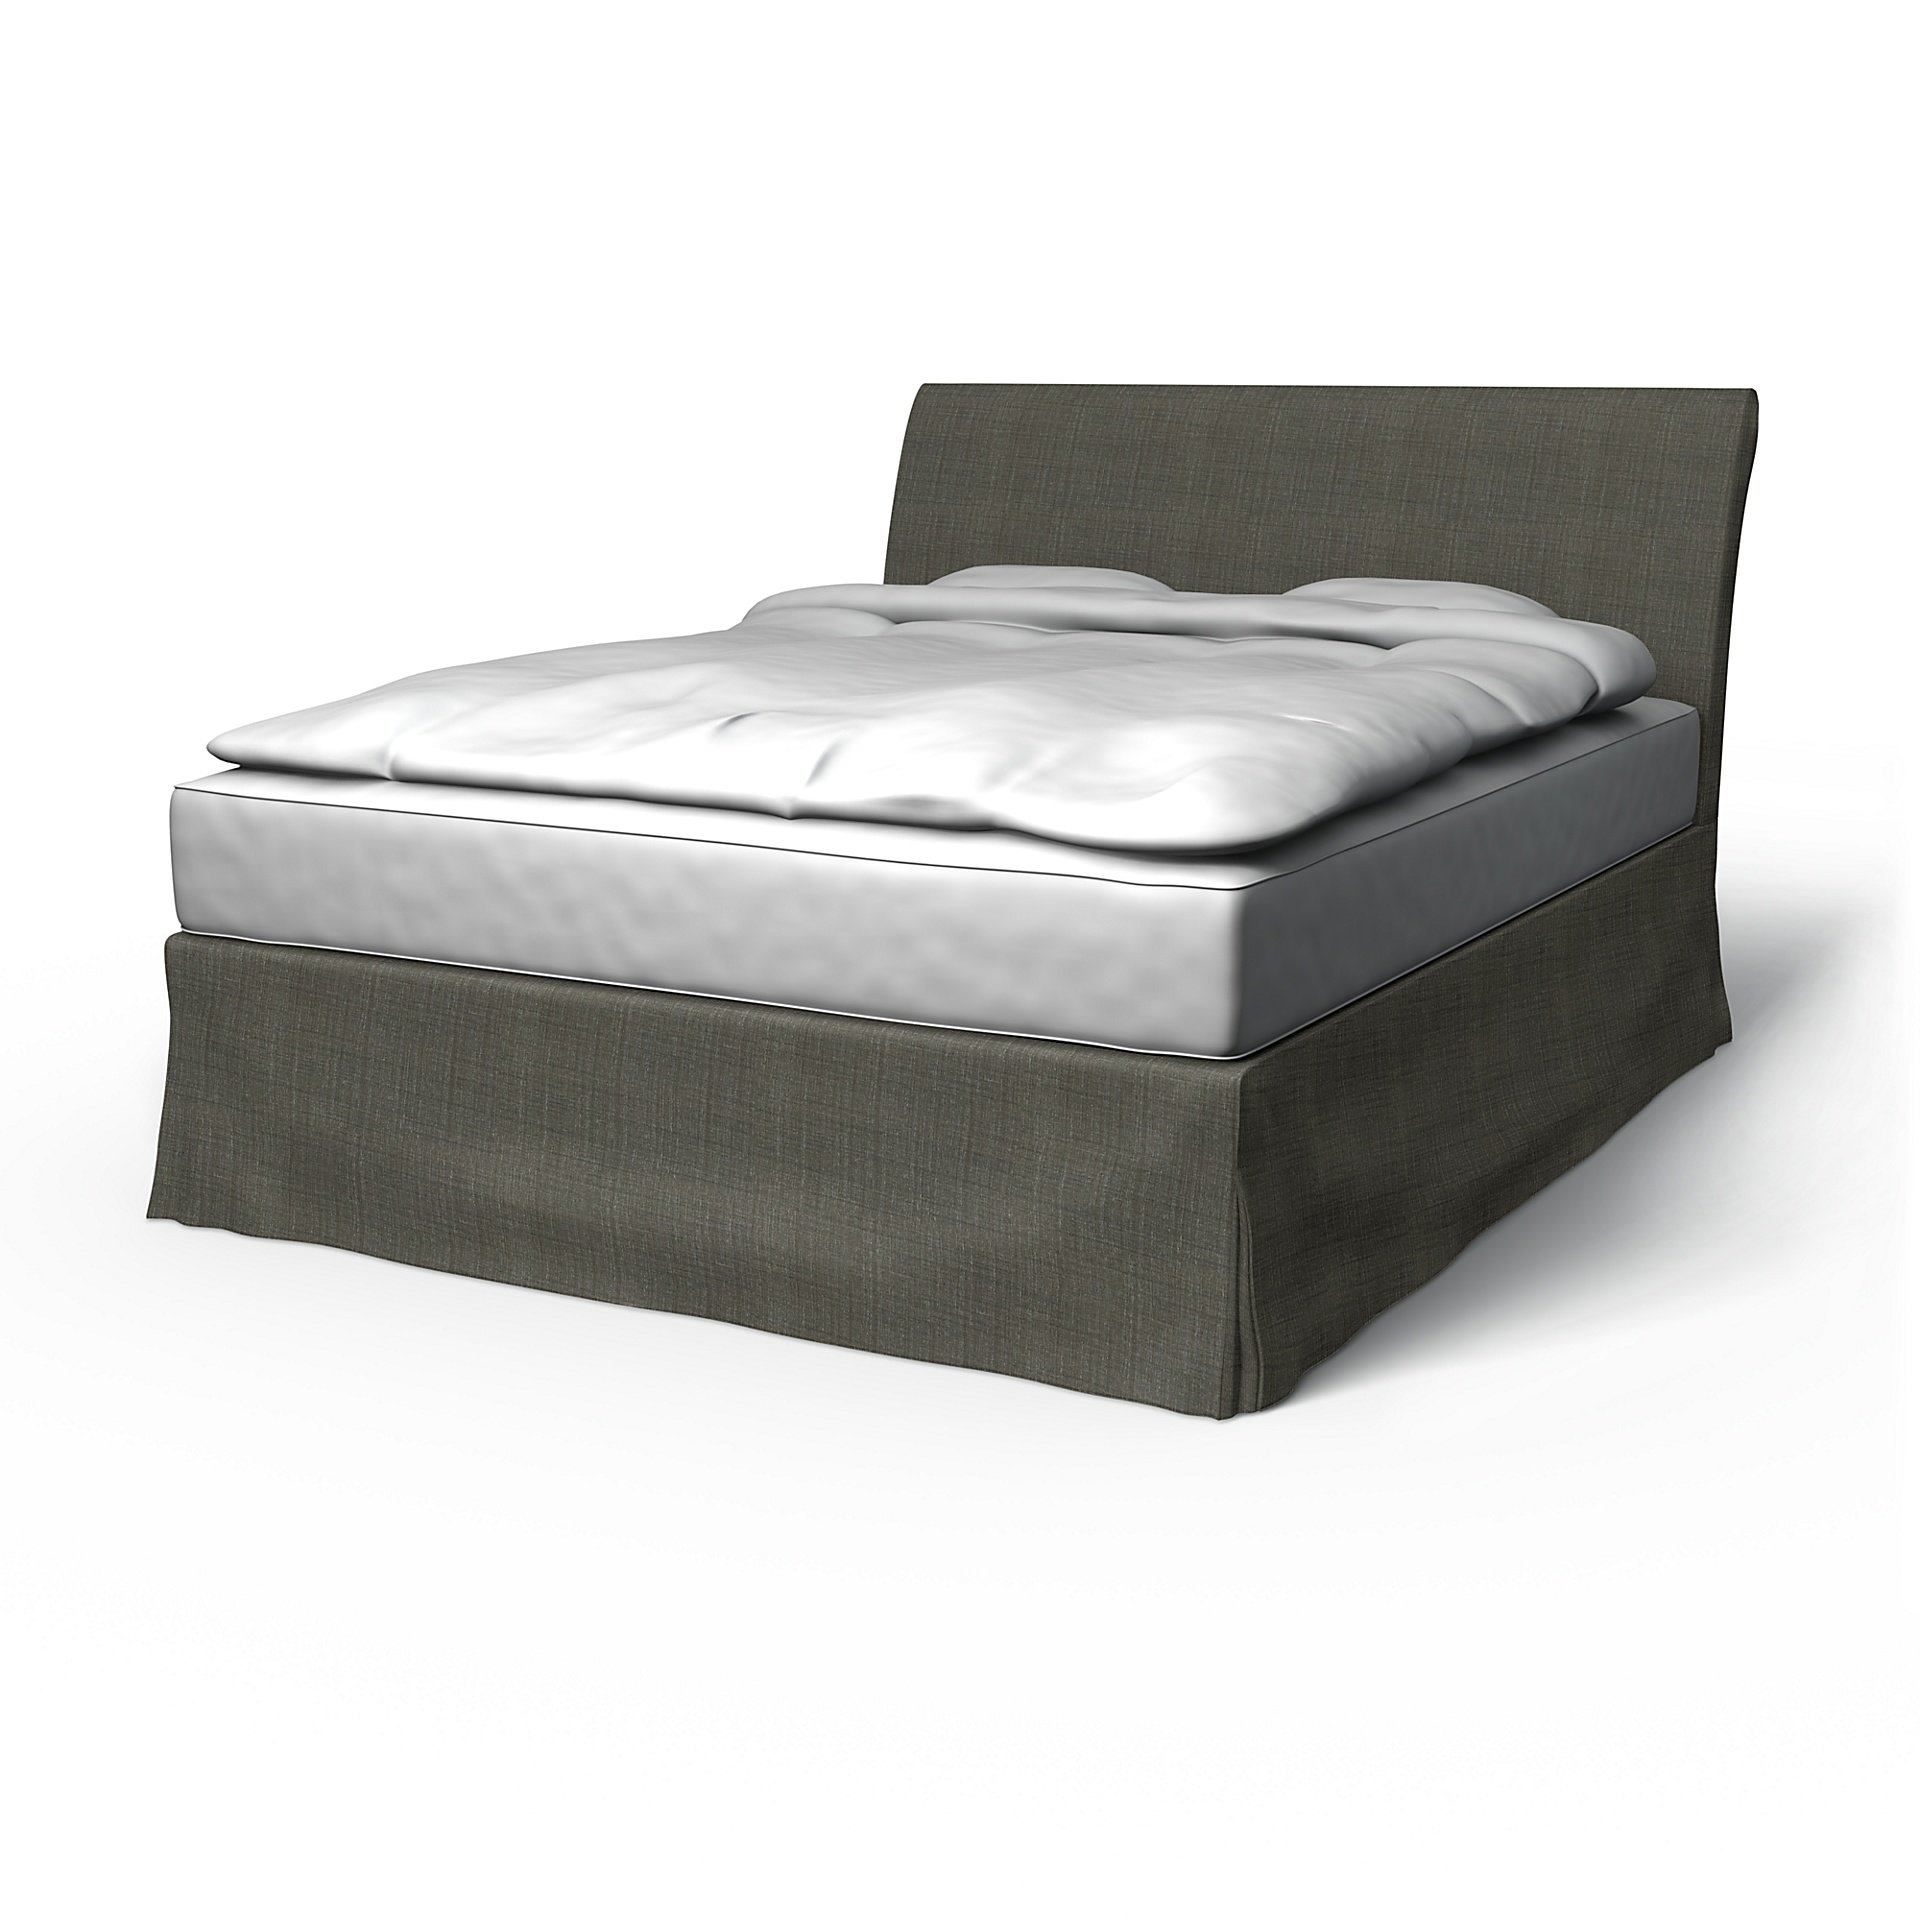 IKEA - Vanvik Bed Frame Cover, Mole Brown, Boucle & Texture - Bemz